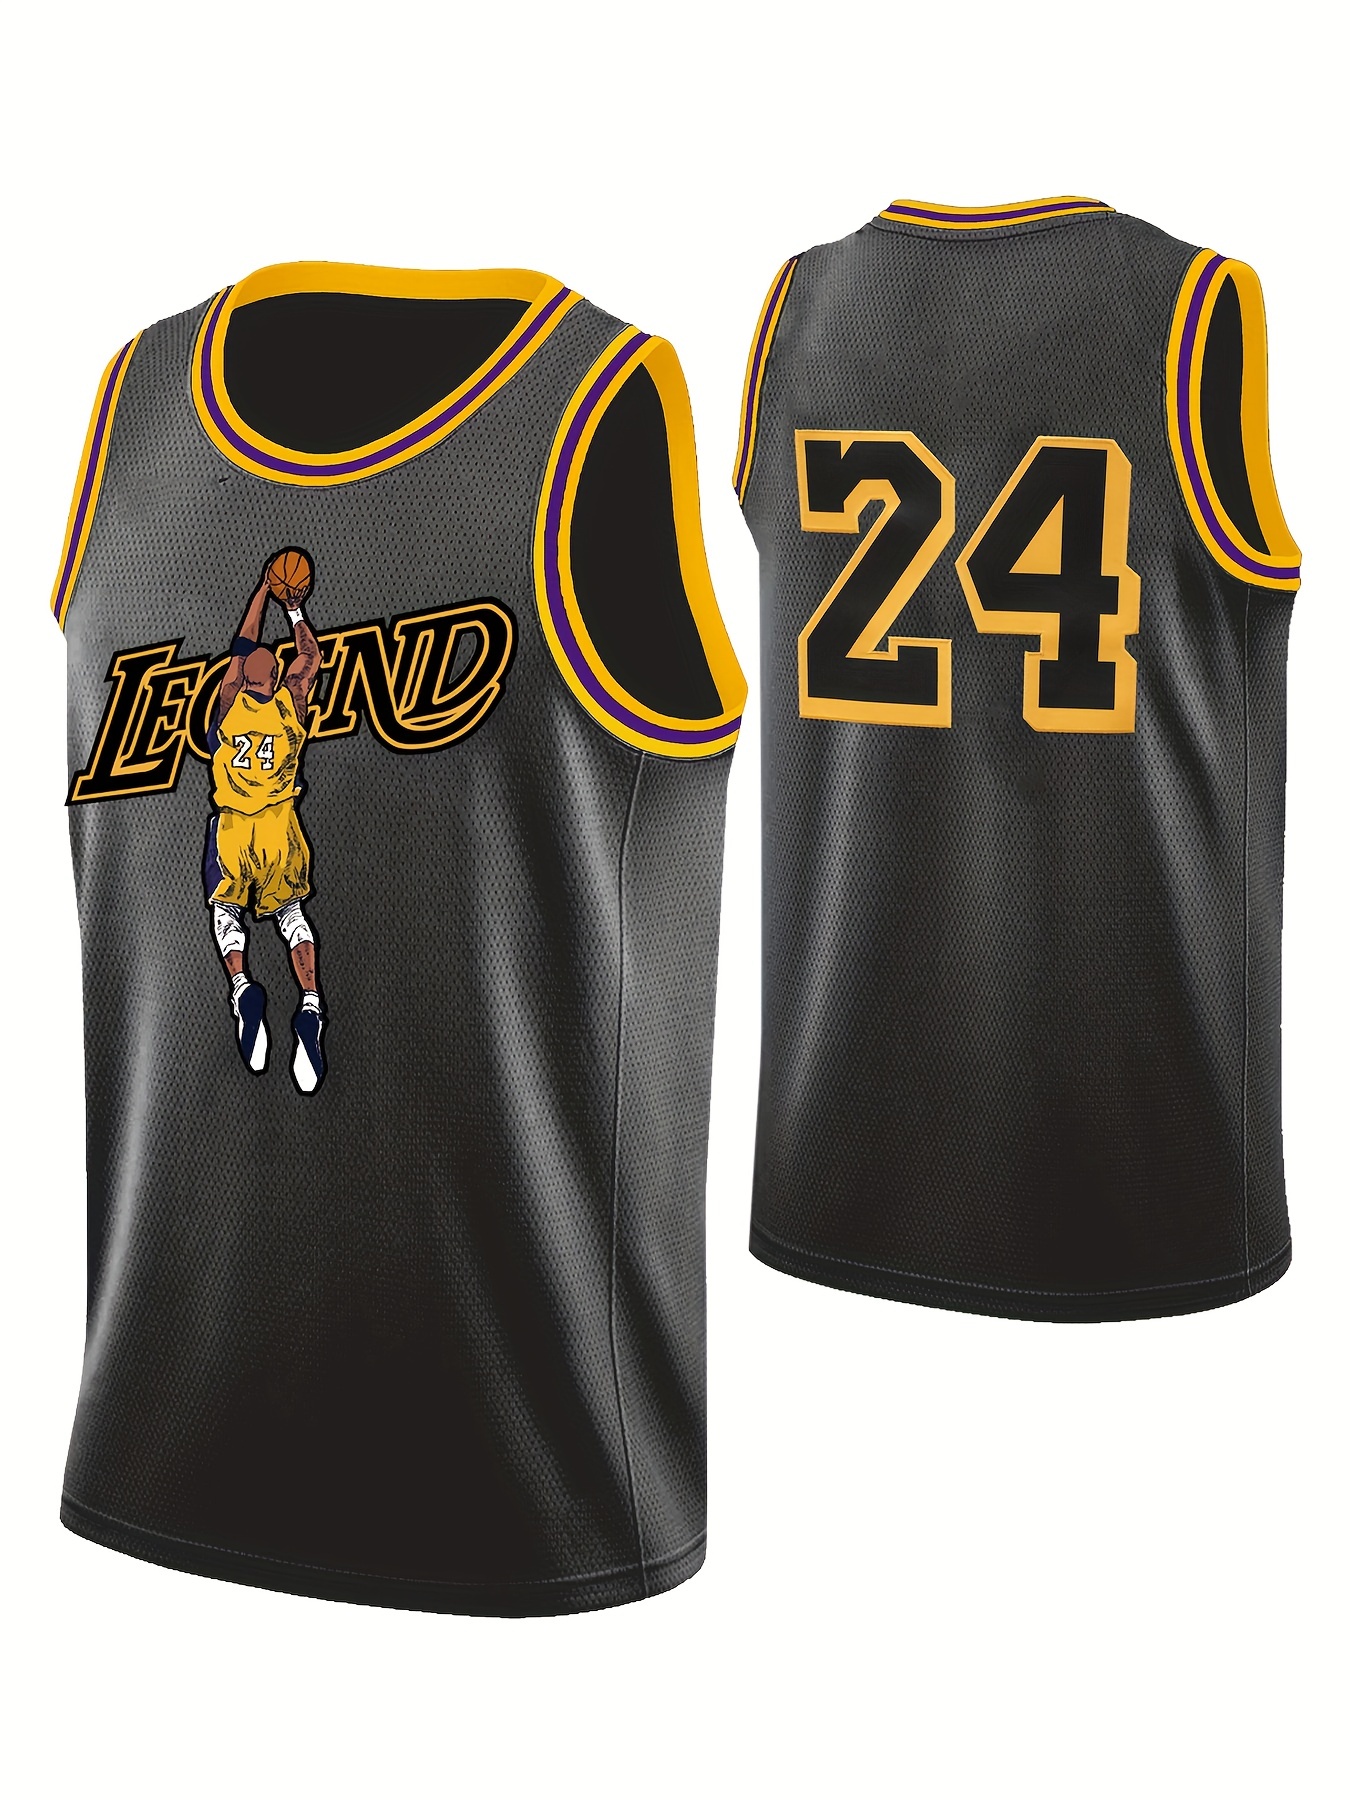 Stephen Curry NBA 2K23 Basketball Unisex T-Shirt - Kaiteez